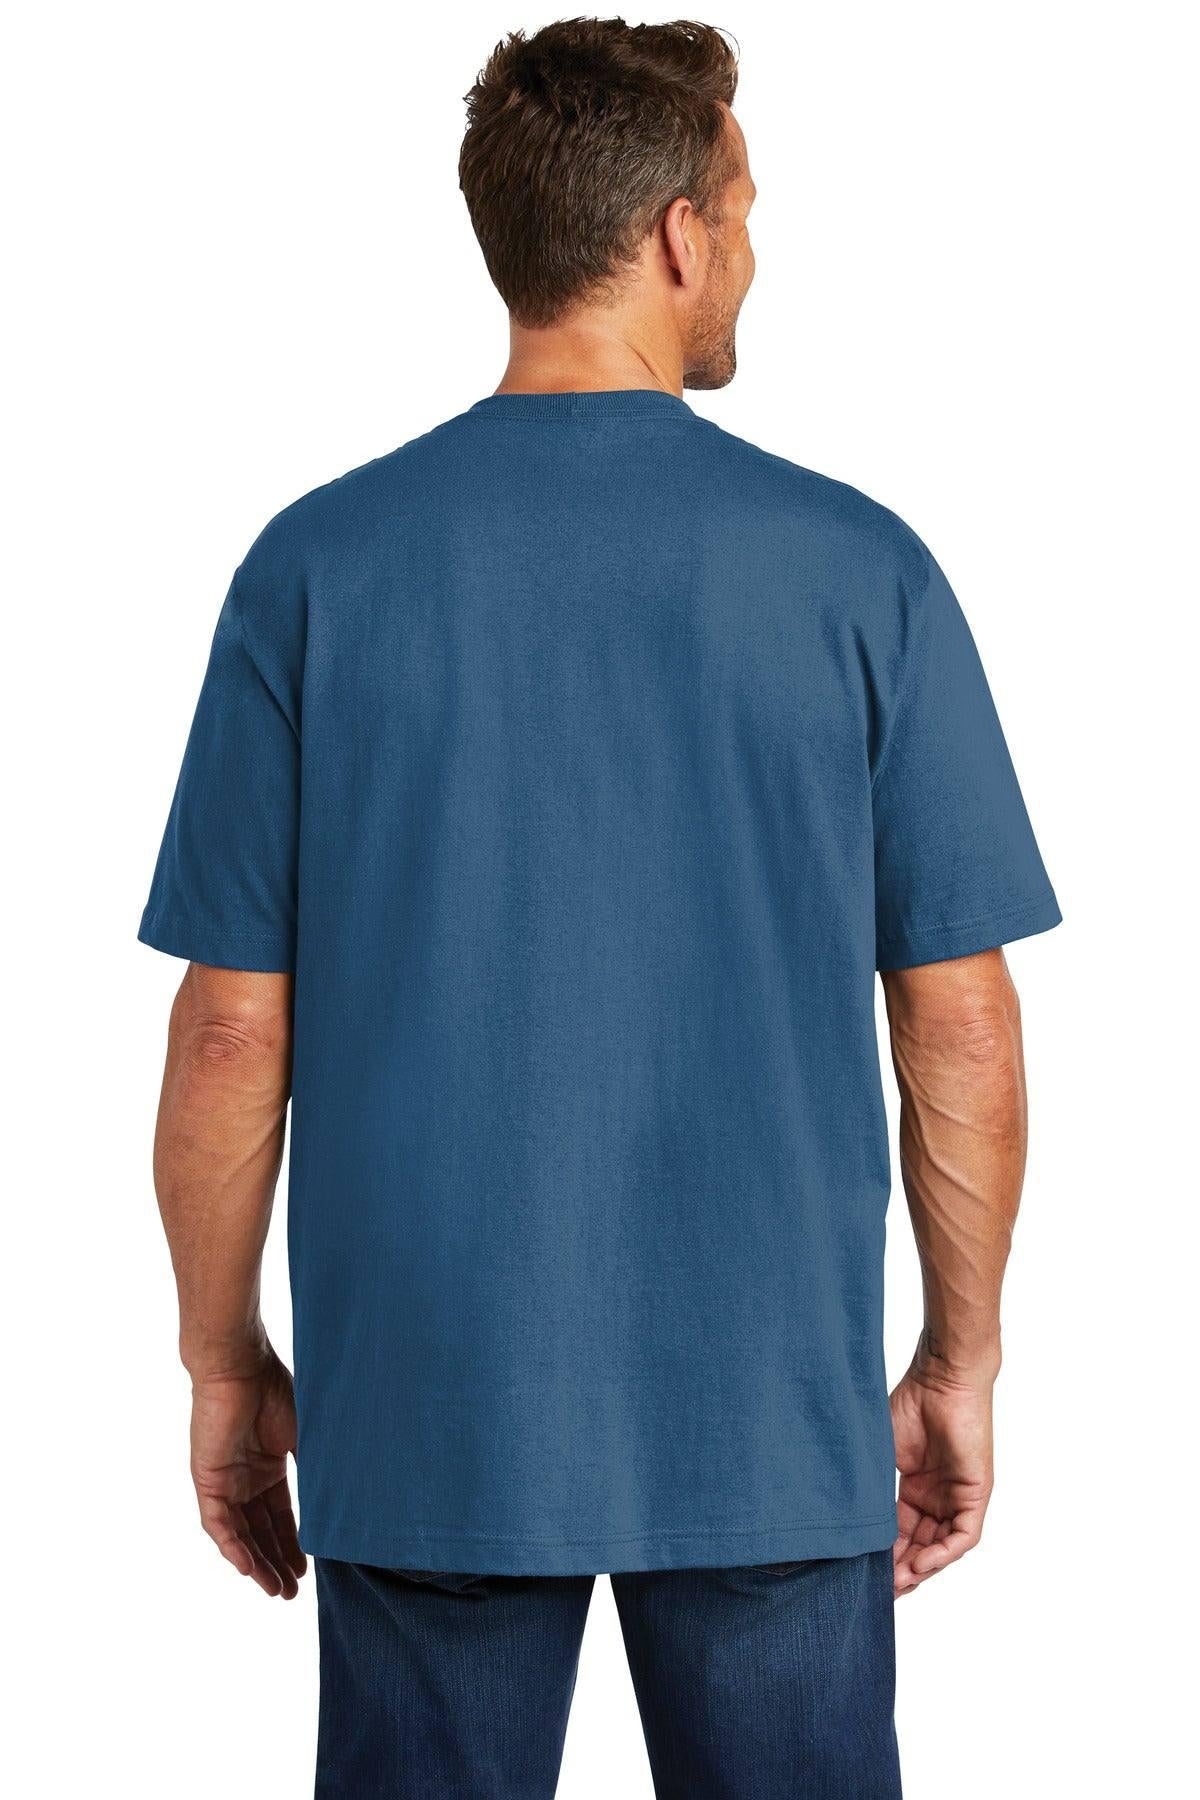 Carhartt Workwear Pocket Short Sleeve T-Shirt CTK87 | Kodiak Wholesale